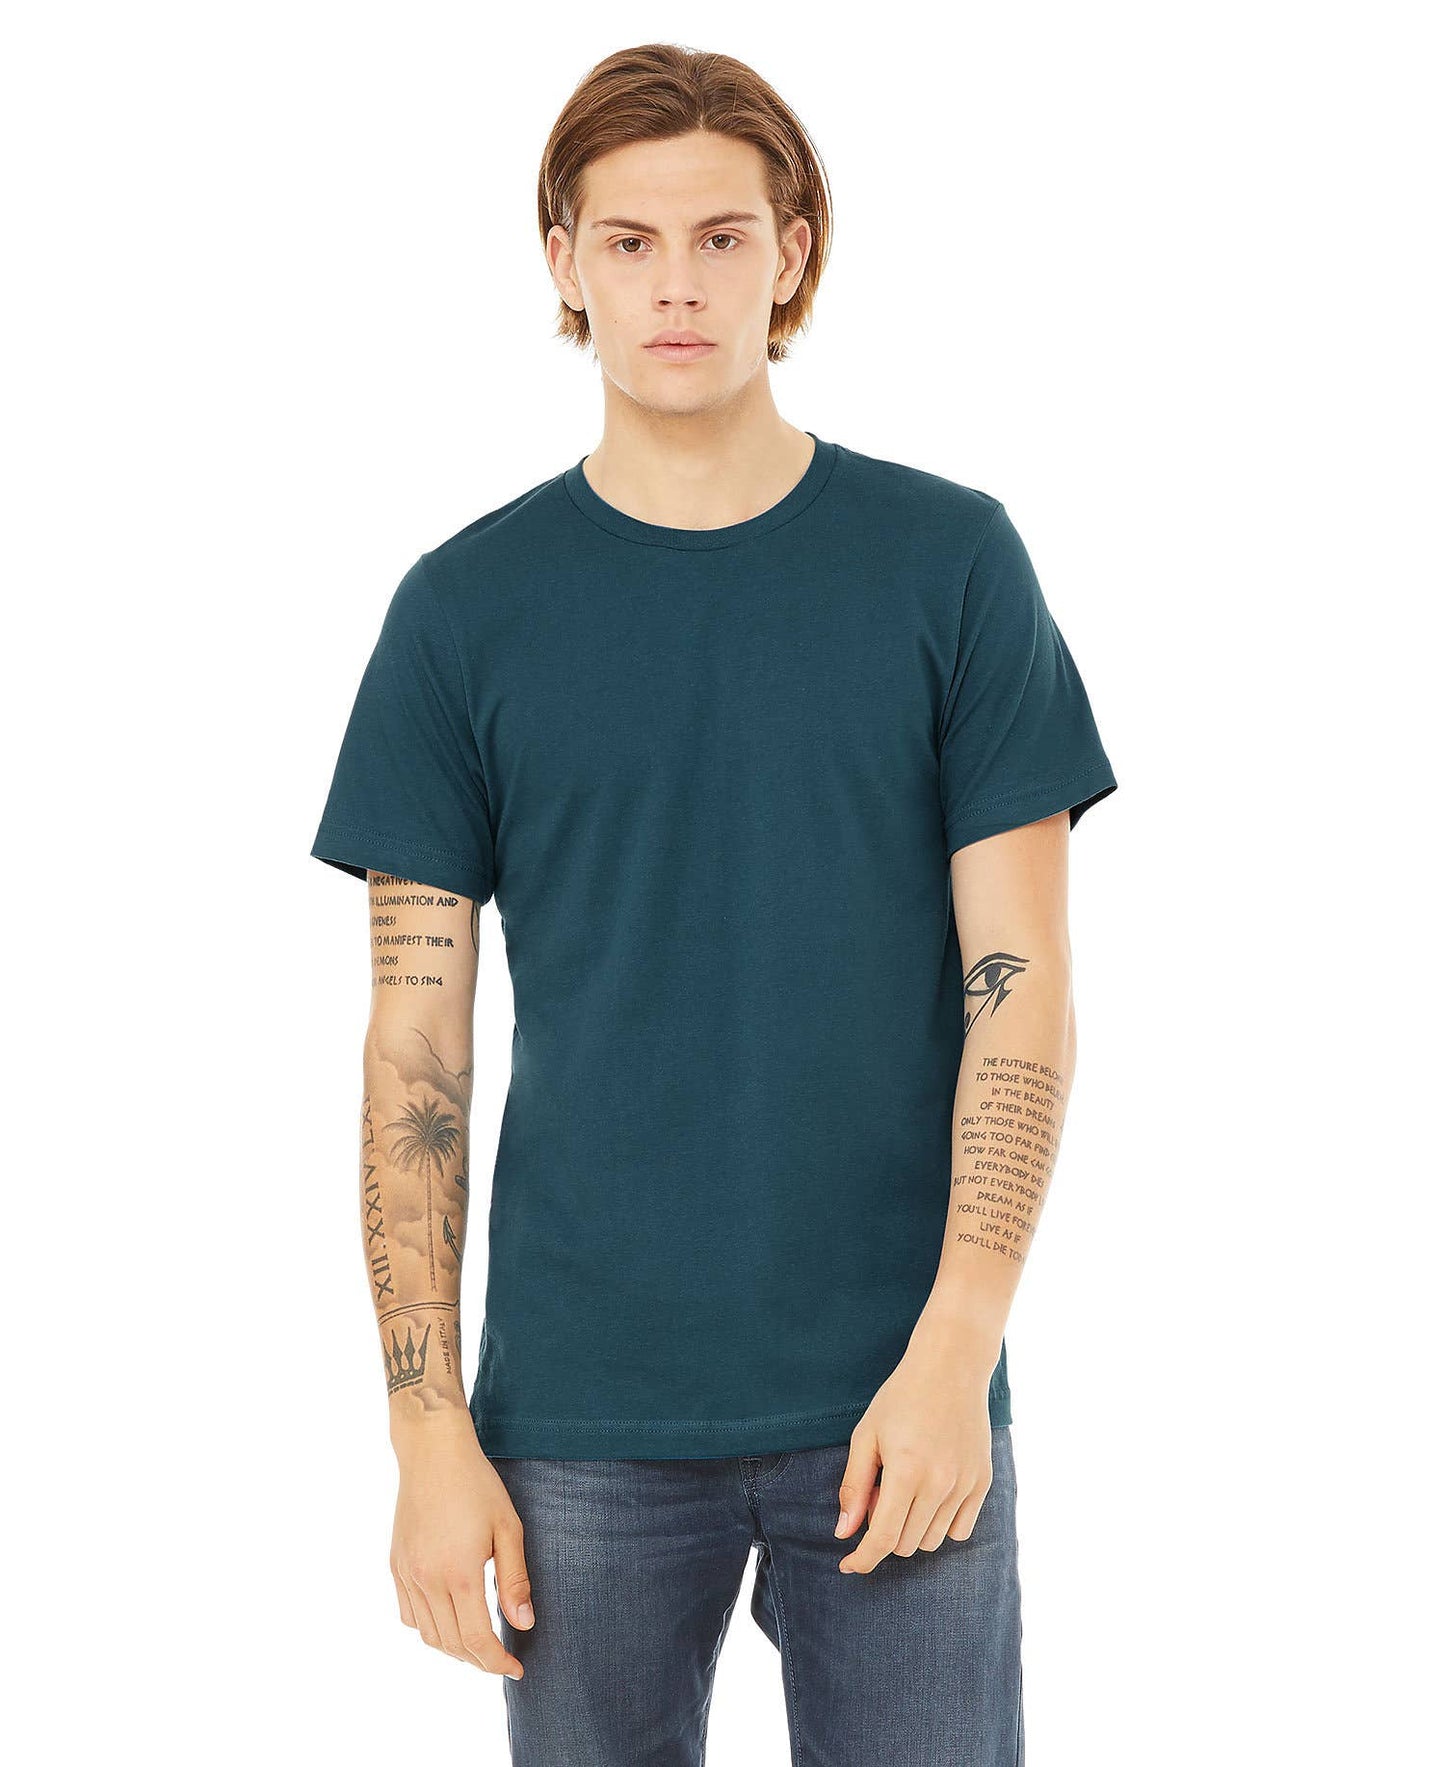 Bella Canvas 3001 T-shirt, Blank Shirts, Unisex Soft Shirts